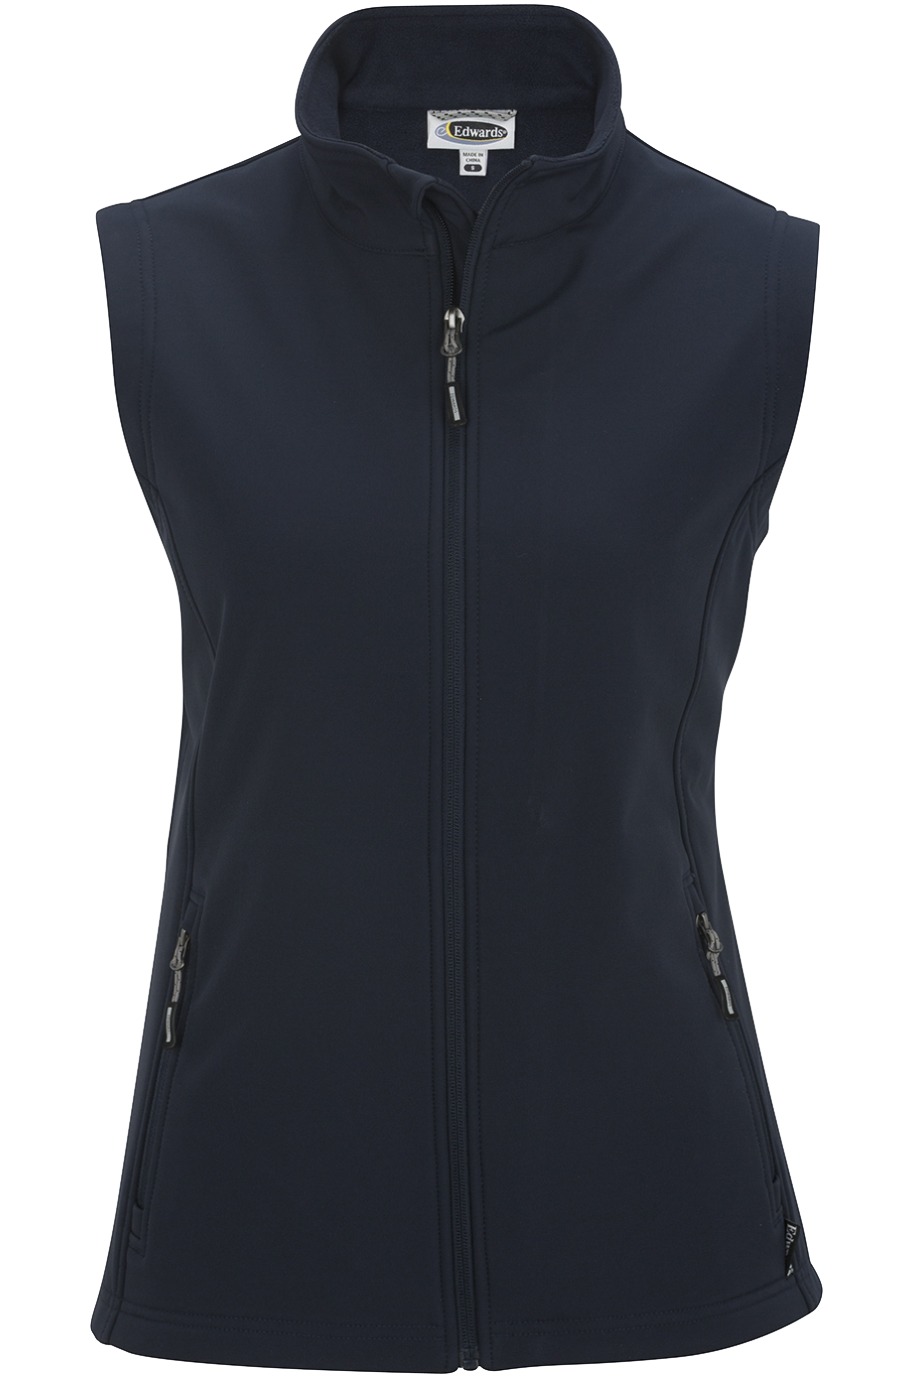 Edwards Garment 6425 - Ladies' Soft Shell Vest